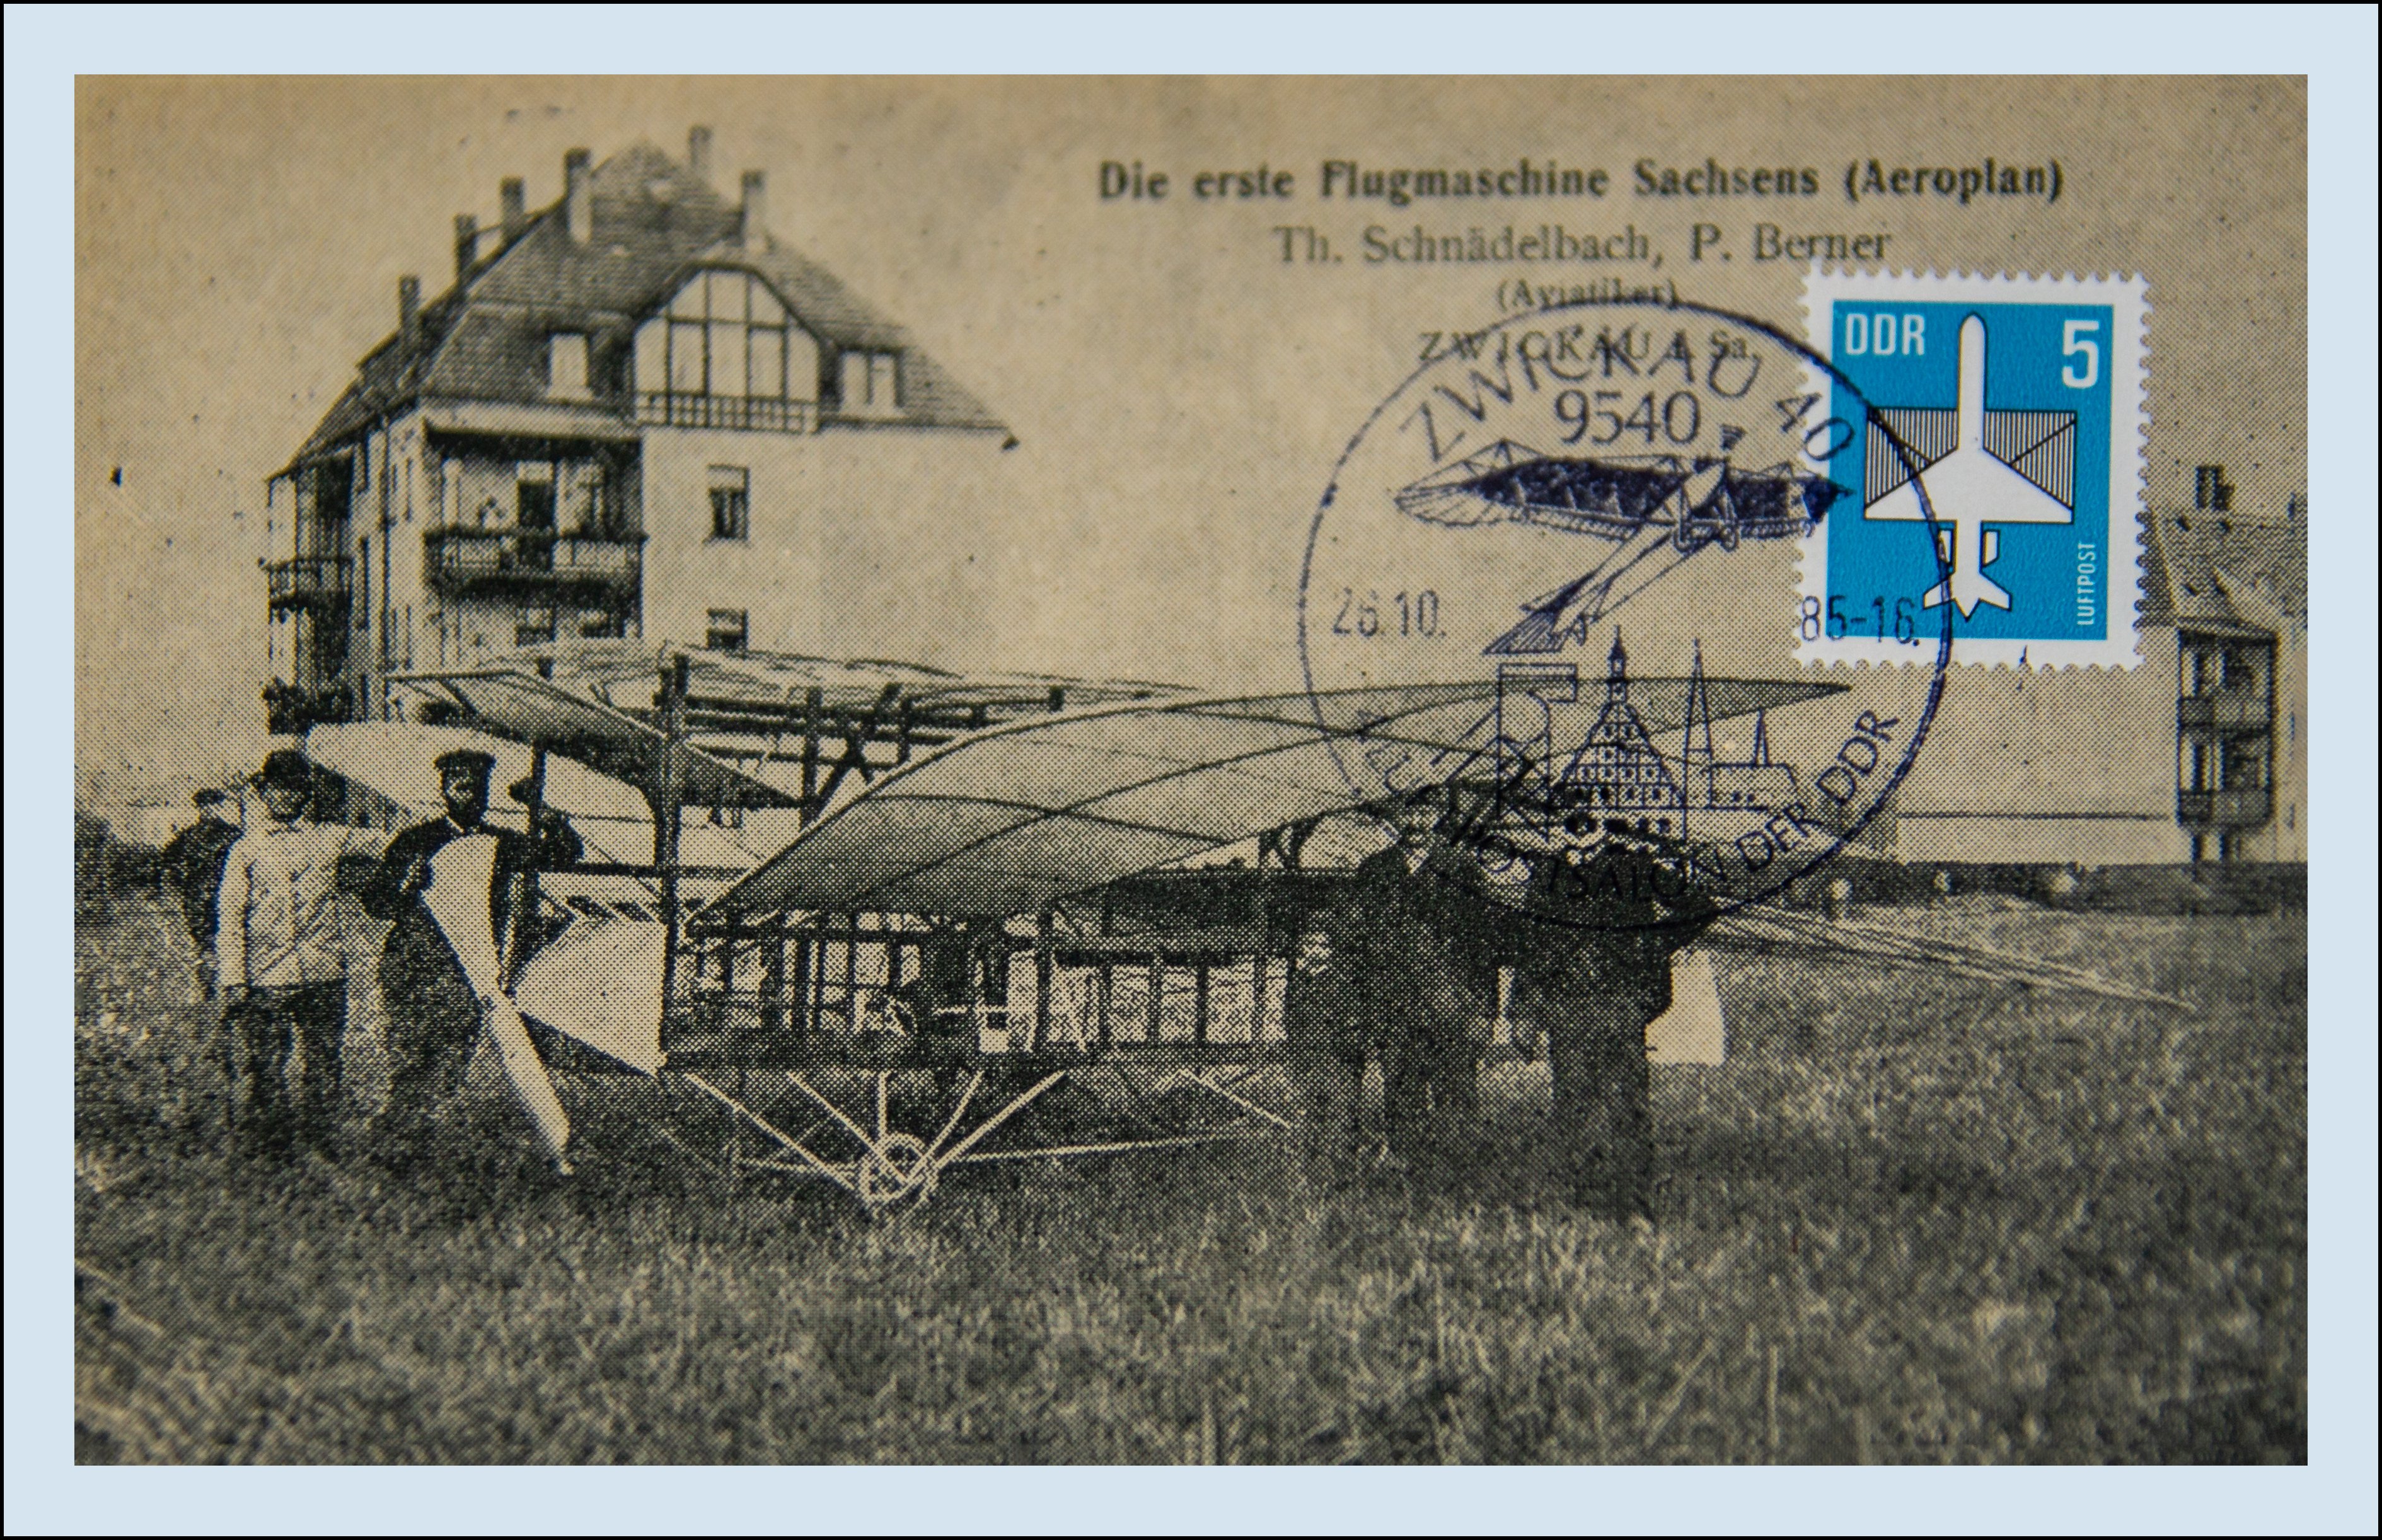 Ansichtskarte (Reprint) "Die erste Flugmaschine Sachsens (Aeroplan) Th. Schnädelbach, P. Berner (Aviatiker) Zwickau i.Sa." Sonderstempel Zwickau 26.10 (Verkehrsmuseum Dresden CC BY-NC-SA)